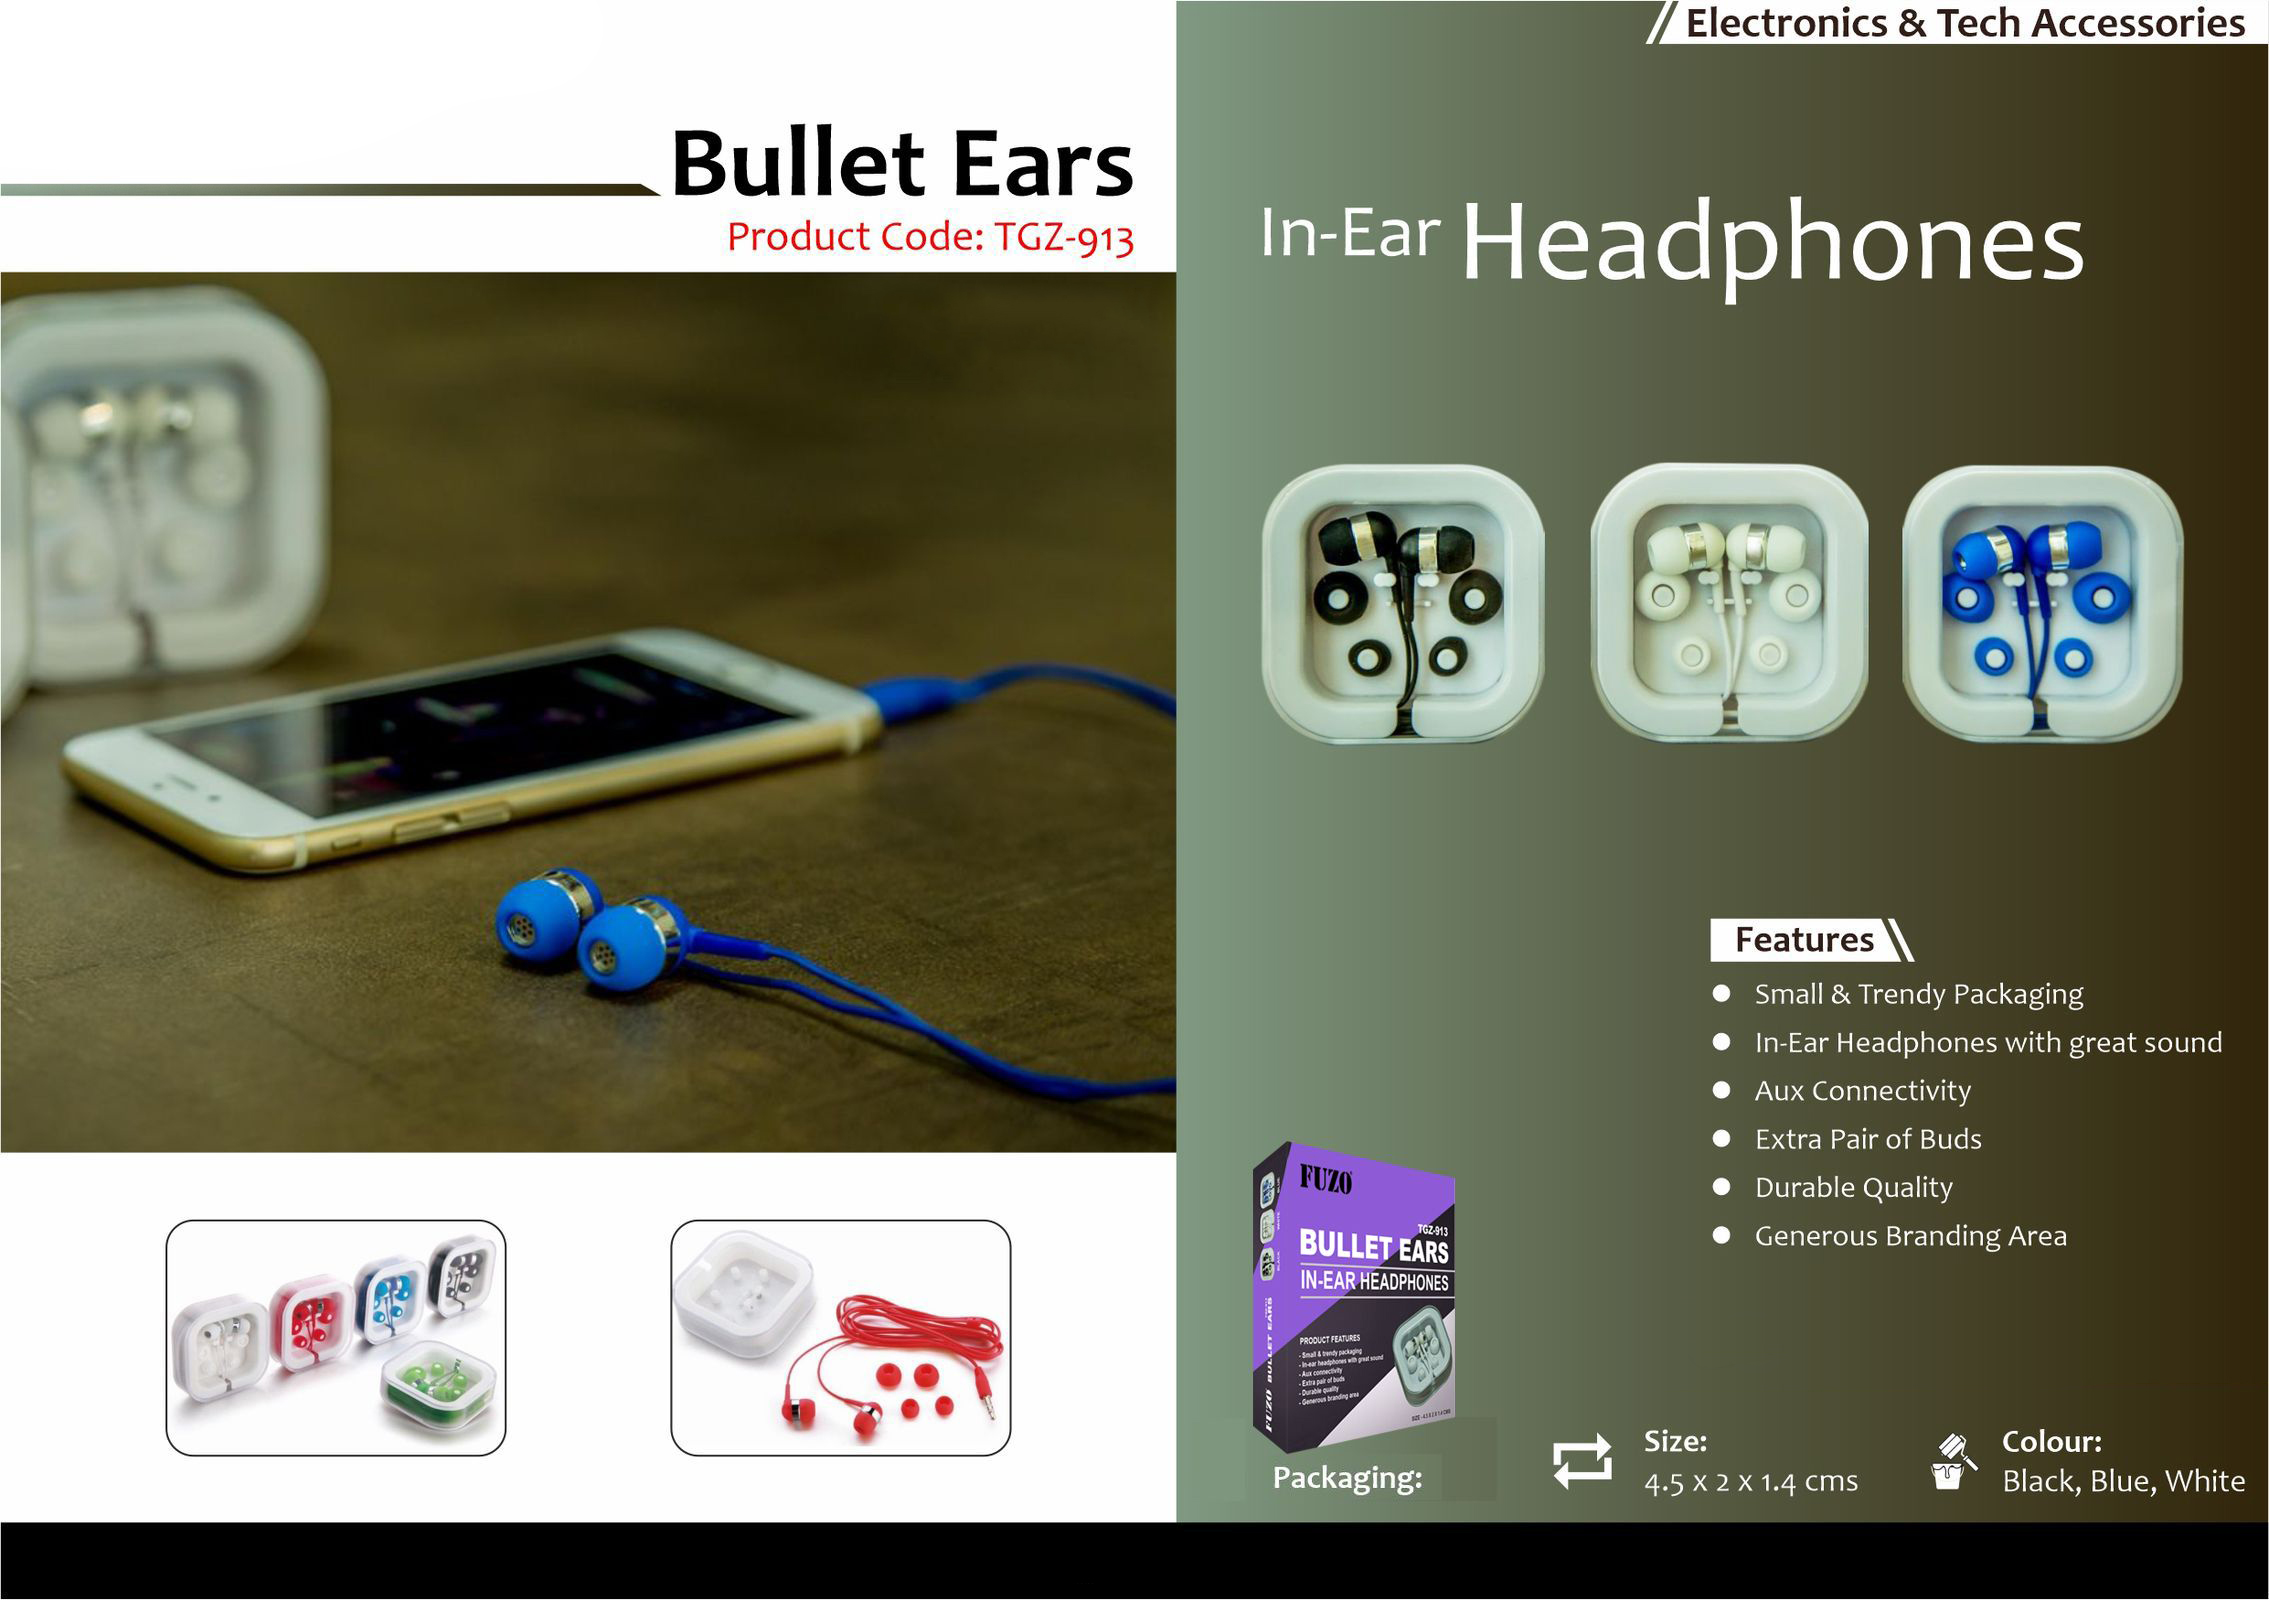 TGZ-913 - Bullet Ears - Headphones